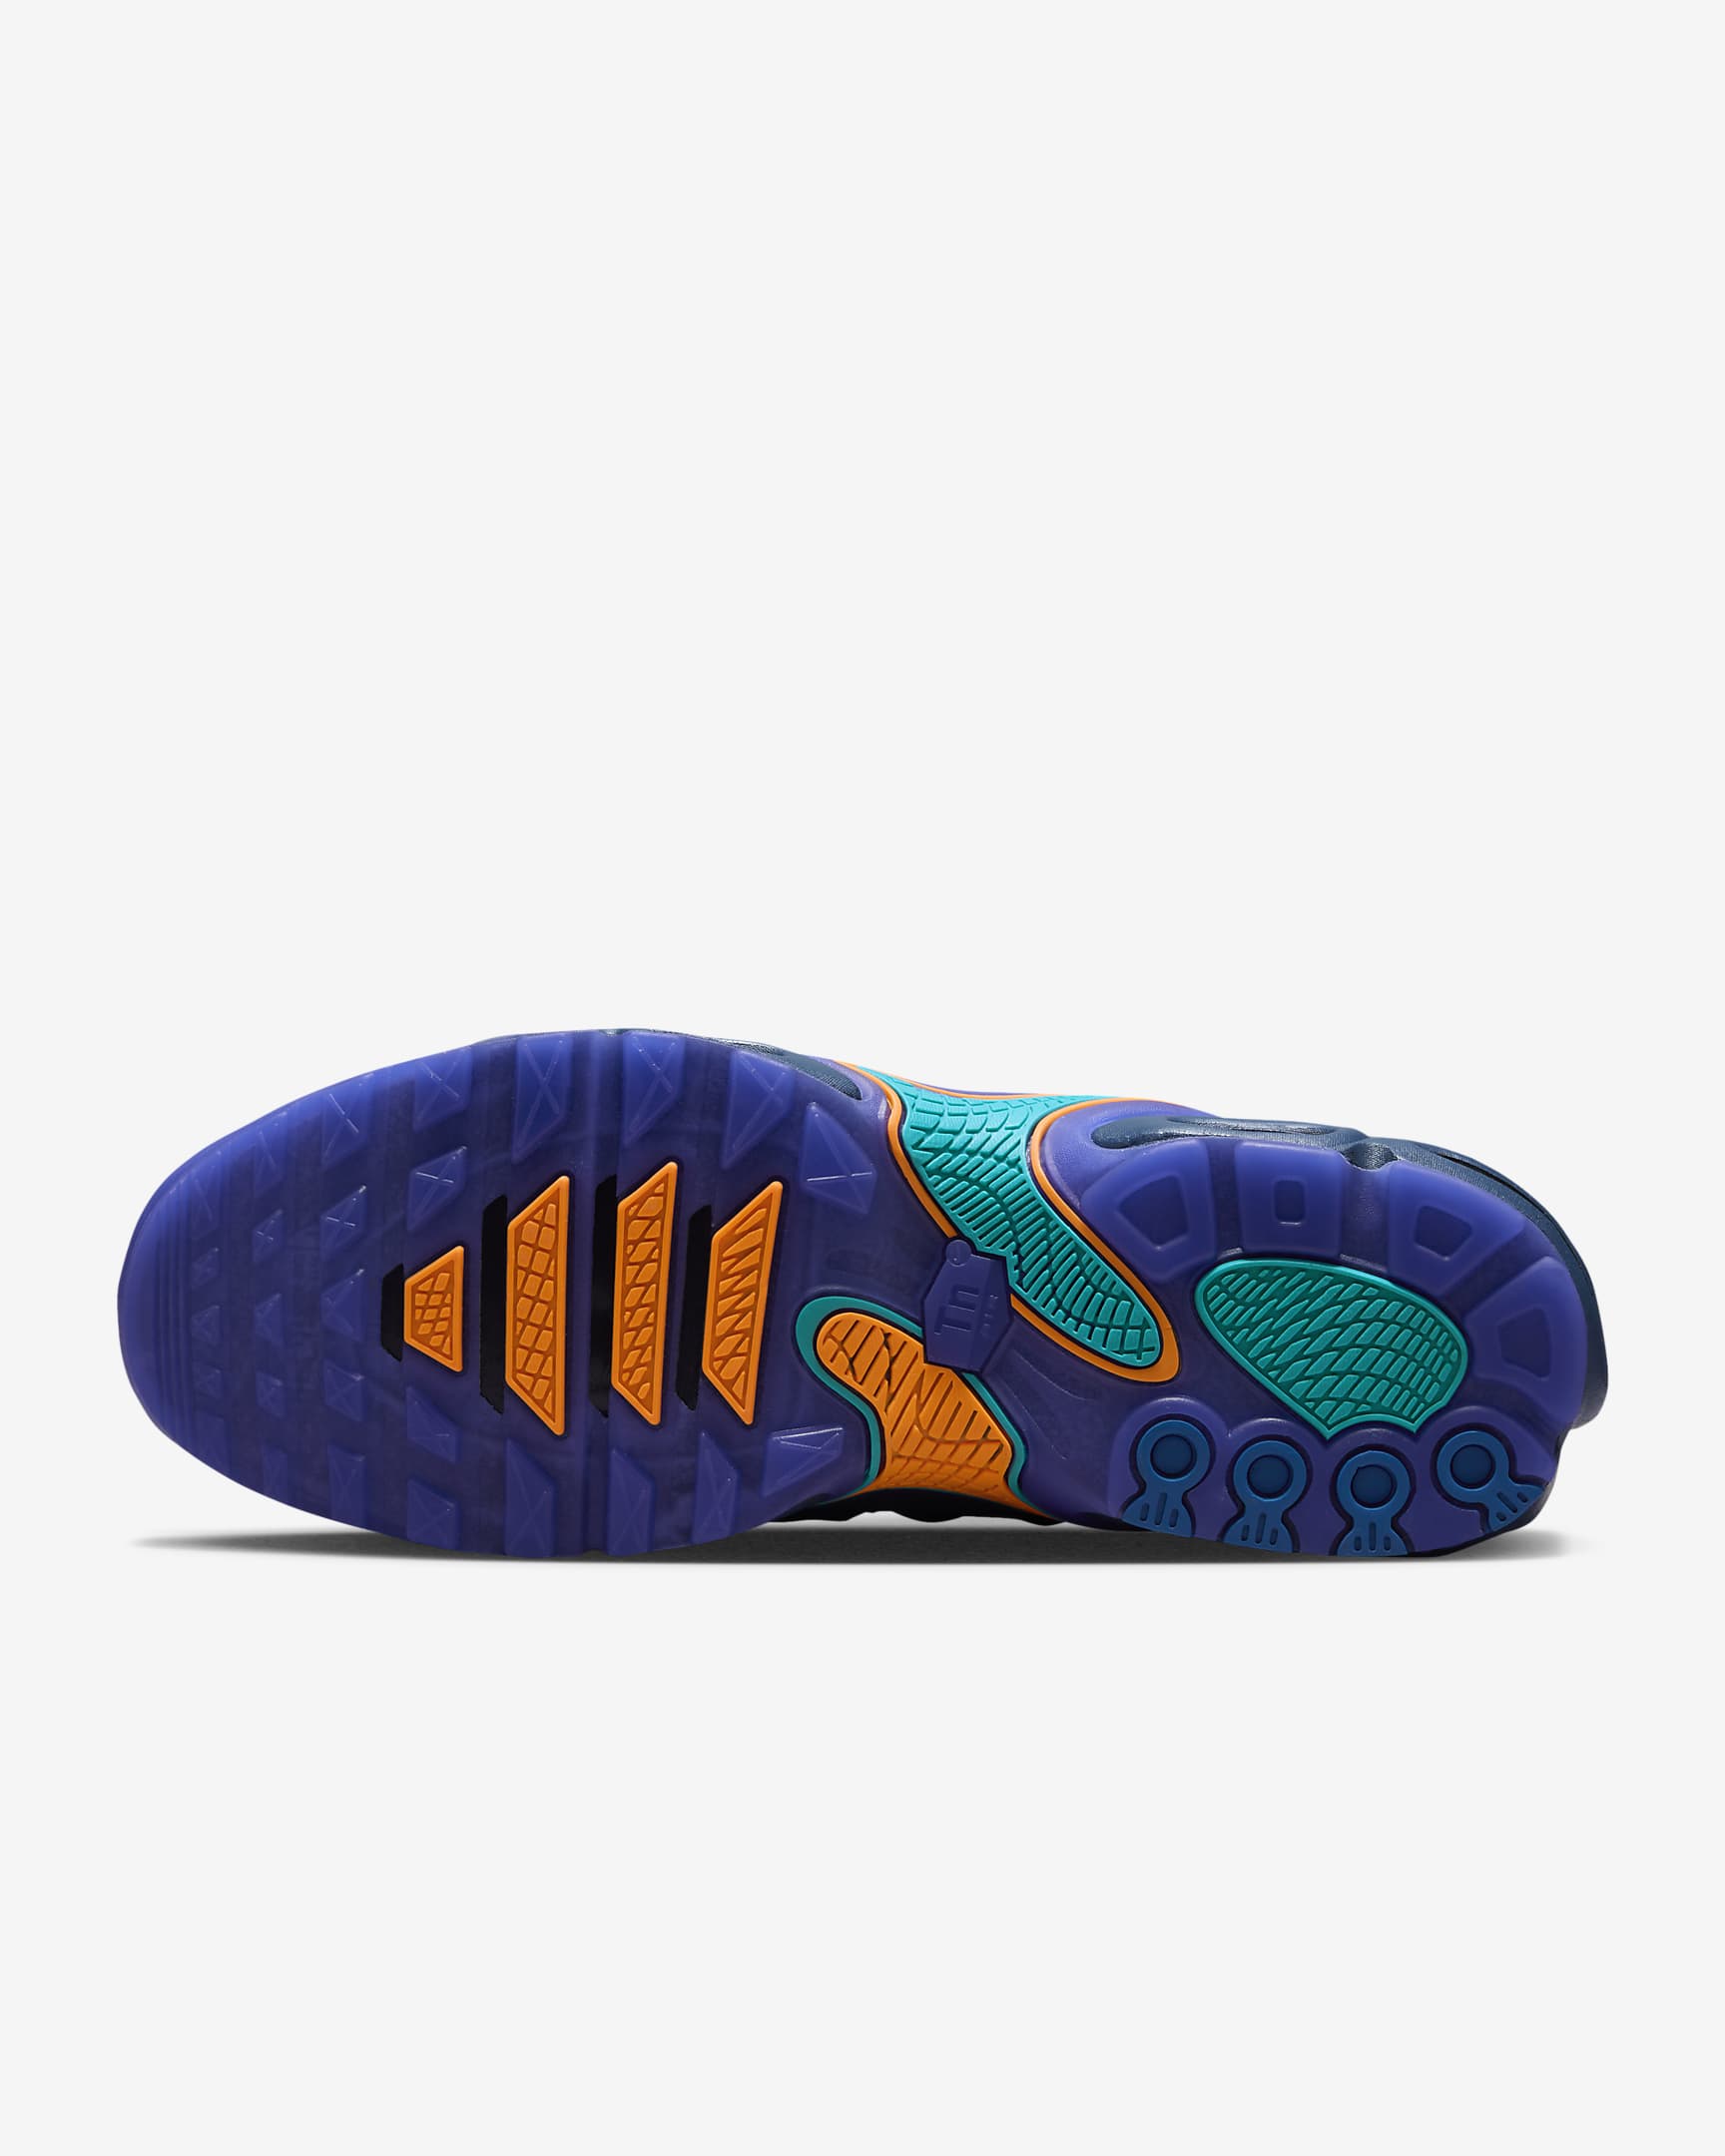 Nike Air Max Plus Drift Men's Shoes - Midnight Navy/Dusty Cactus/Persian Violet/Total Orange